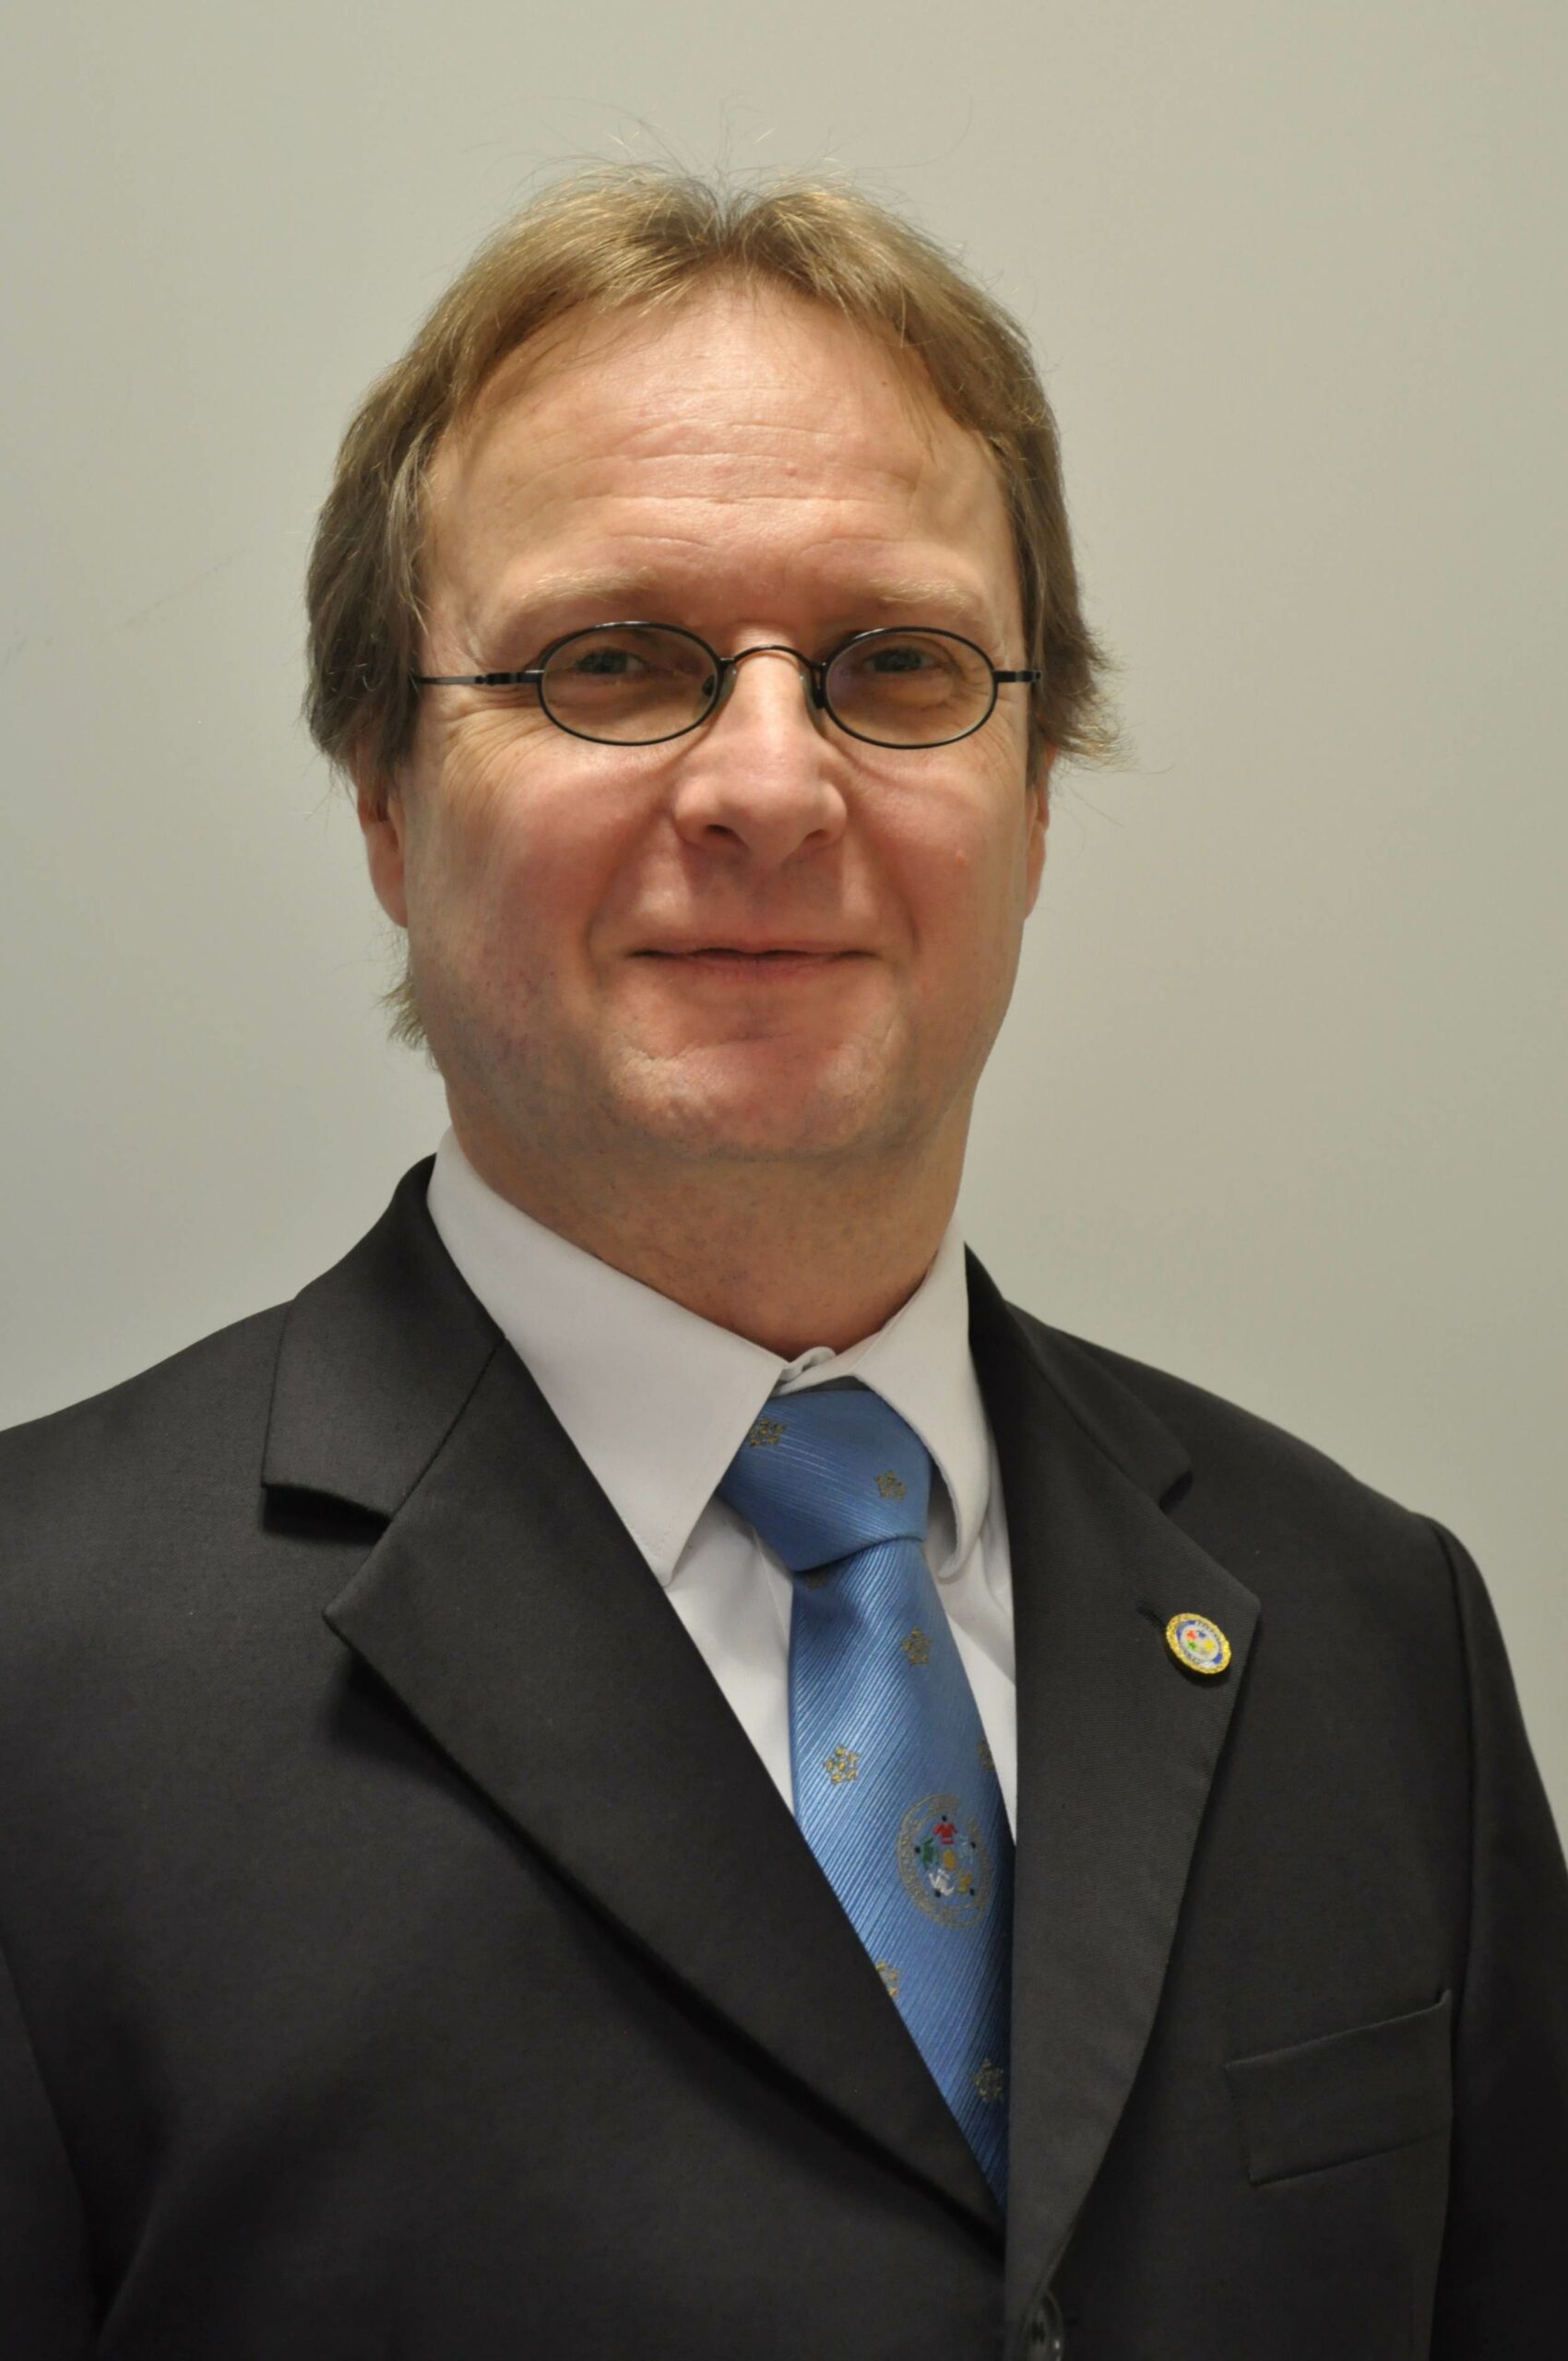 Mr. Stefan Bernreuther